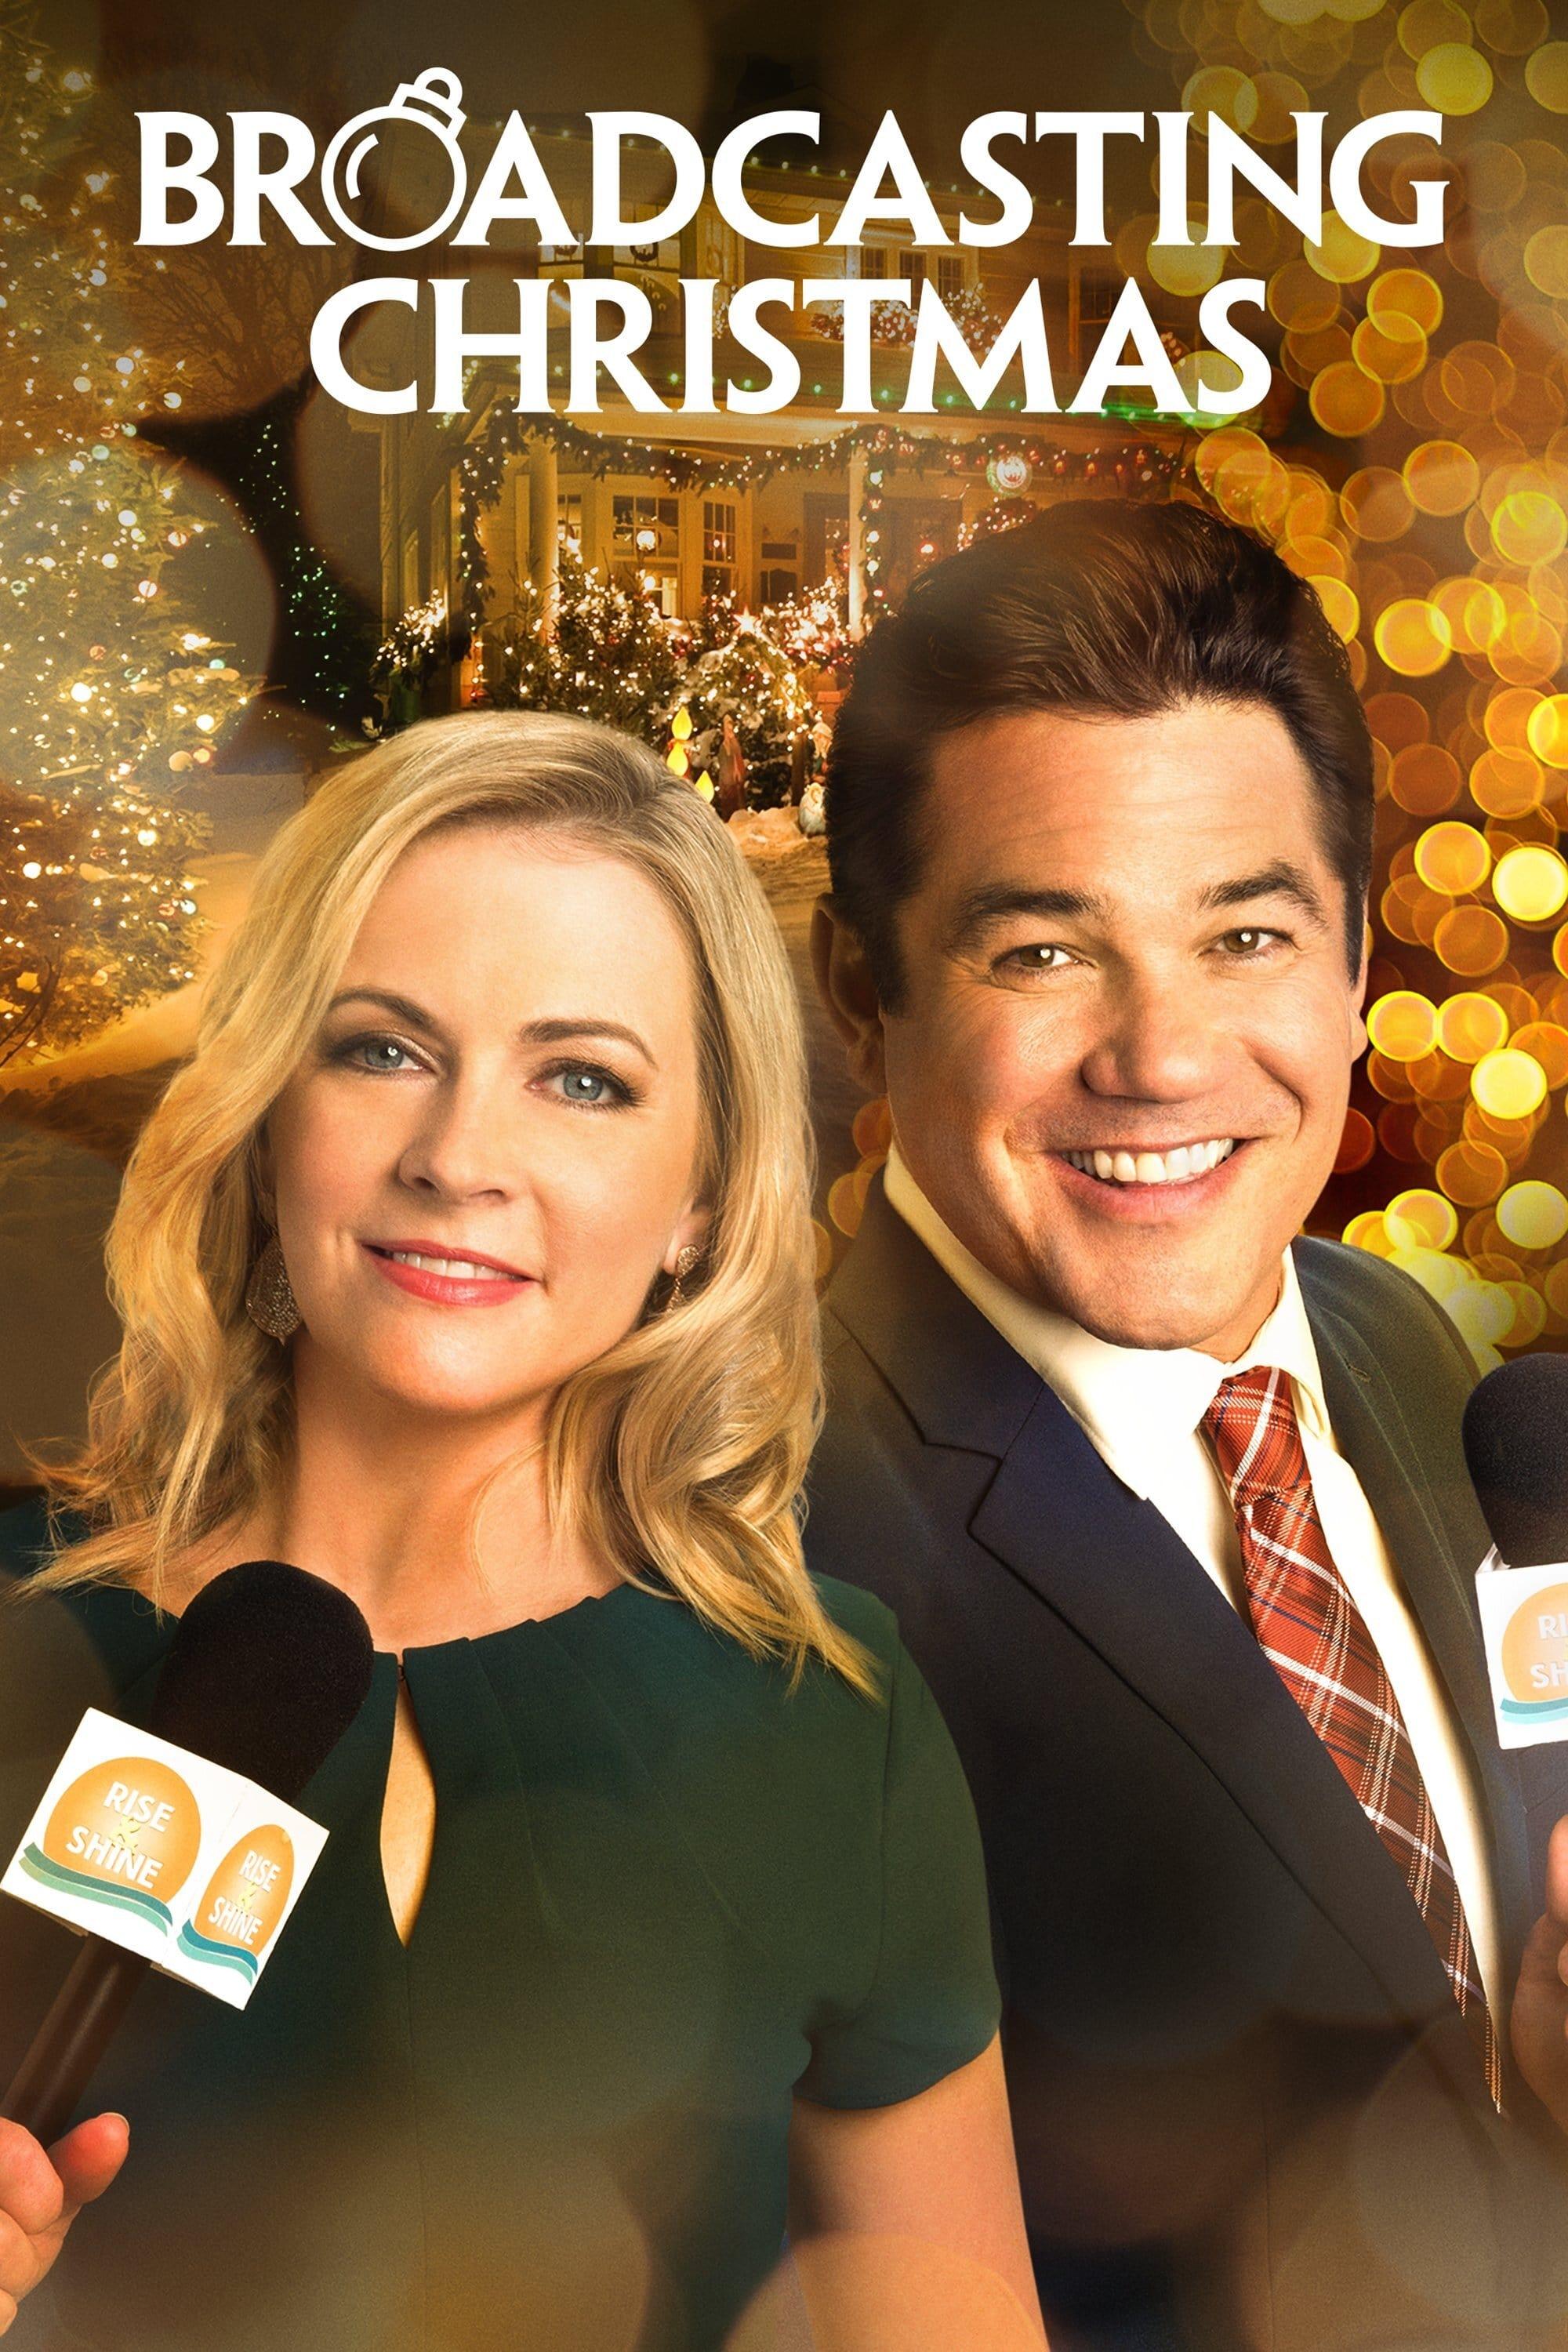 Broadcasting Christmas poster